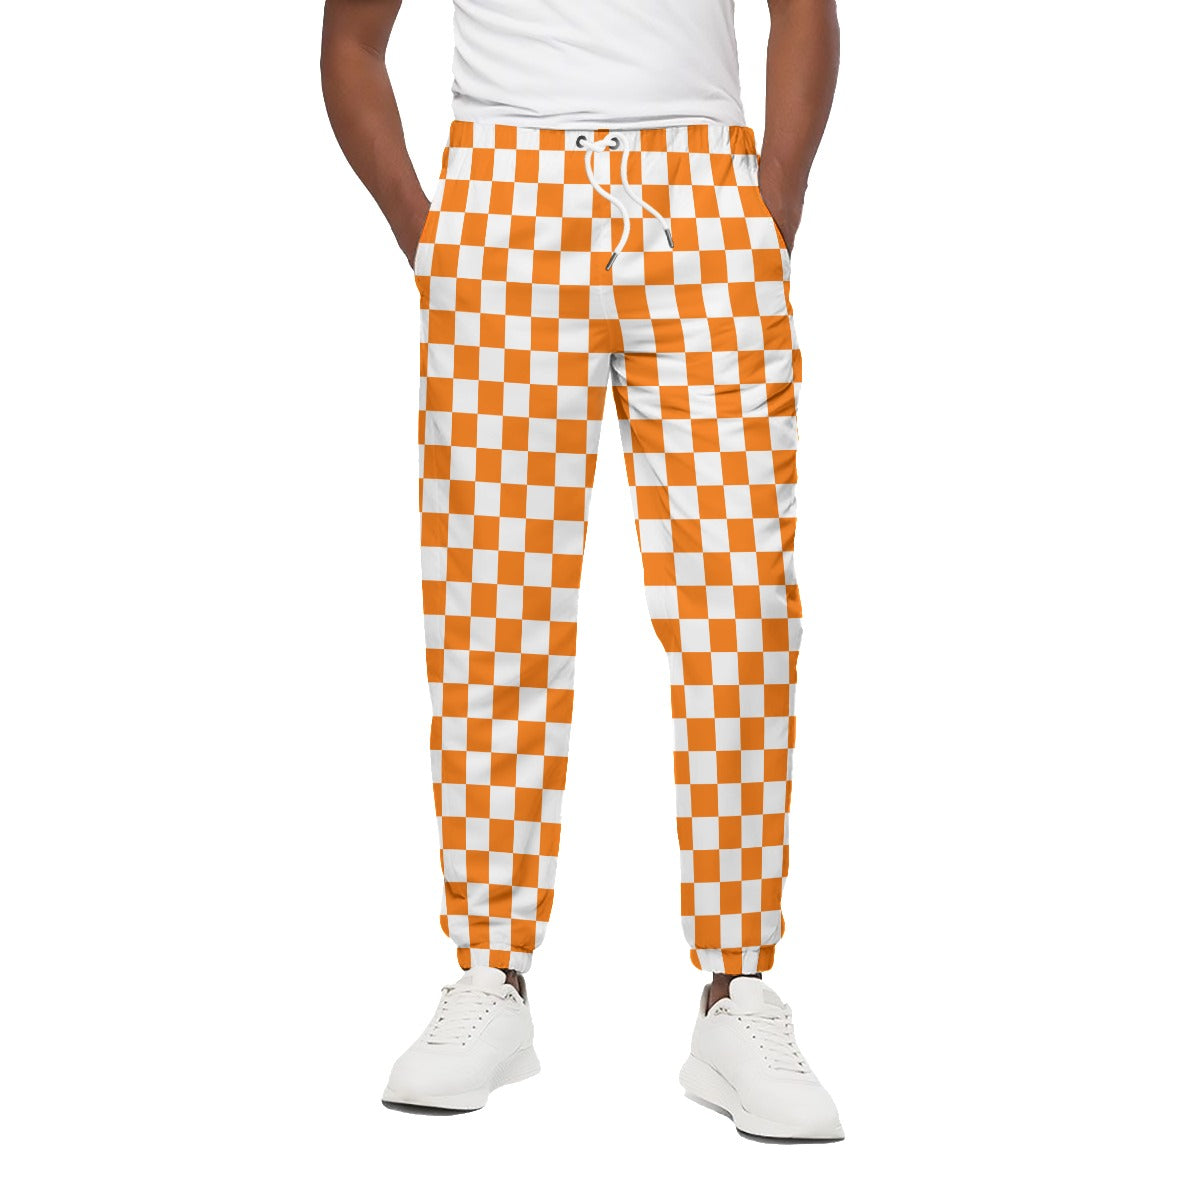 Checkerboard Unisex Jogging Pants 100% Cotton